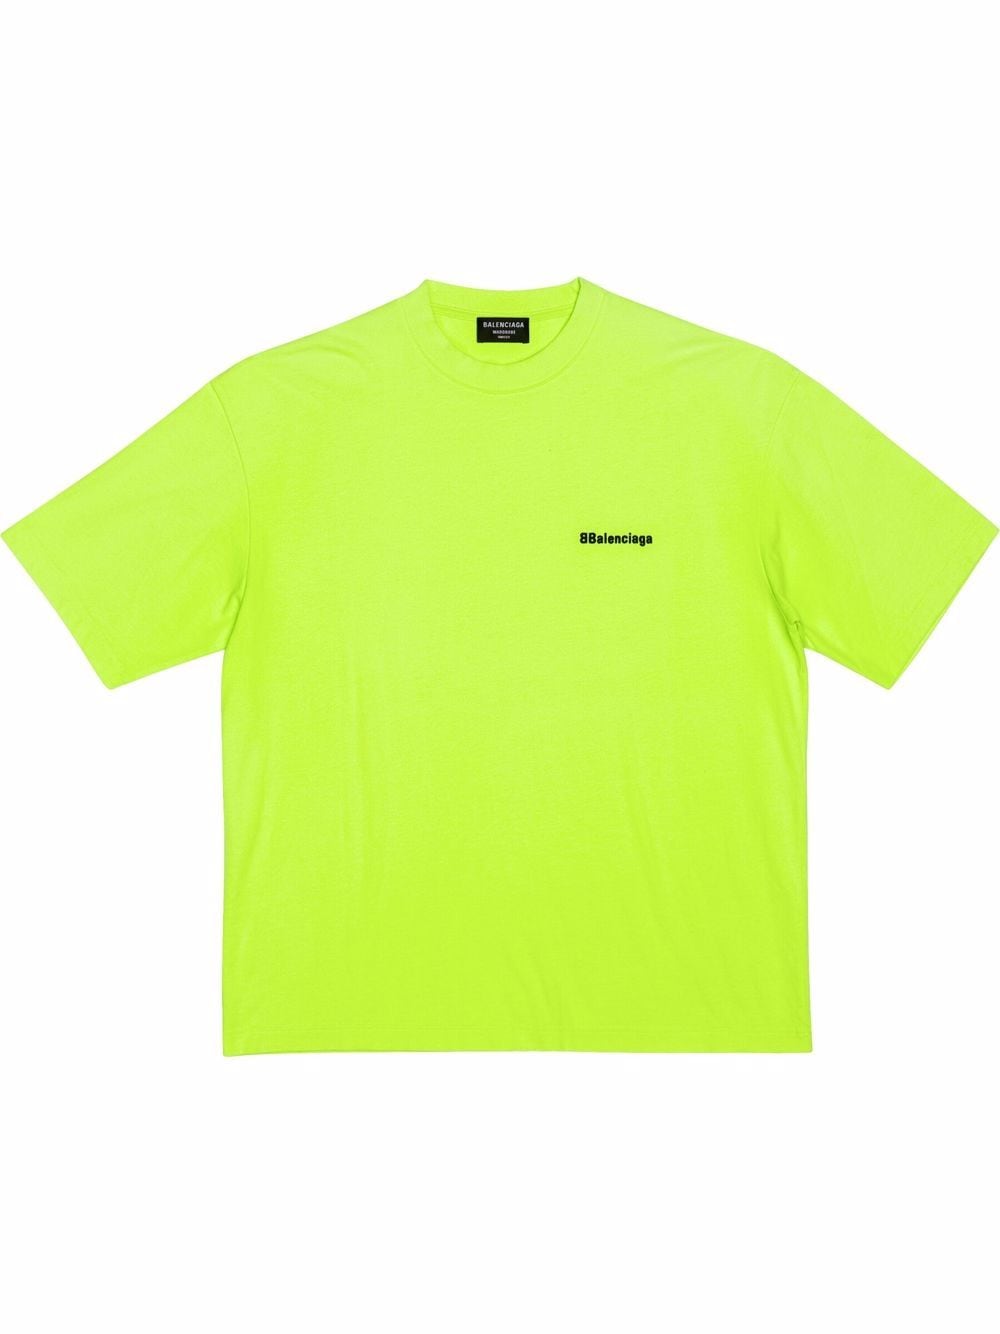 Balenciaga BB embroidered logo T-shirt - Yellow